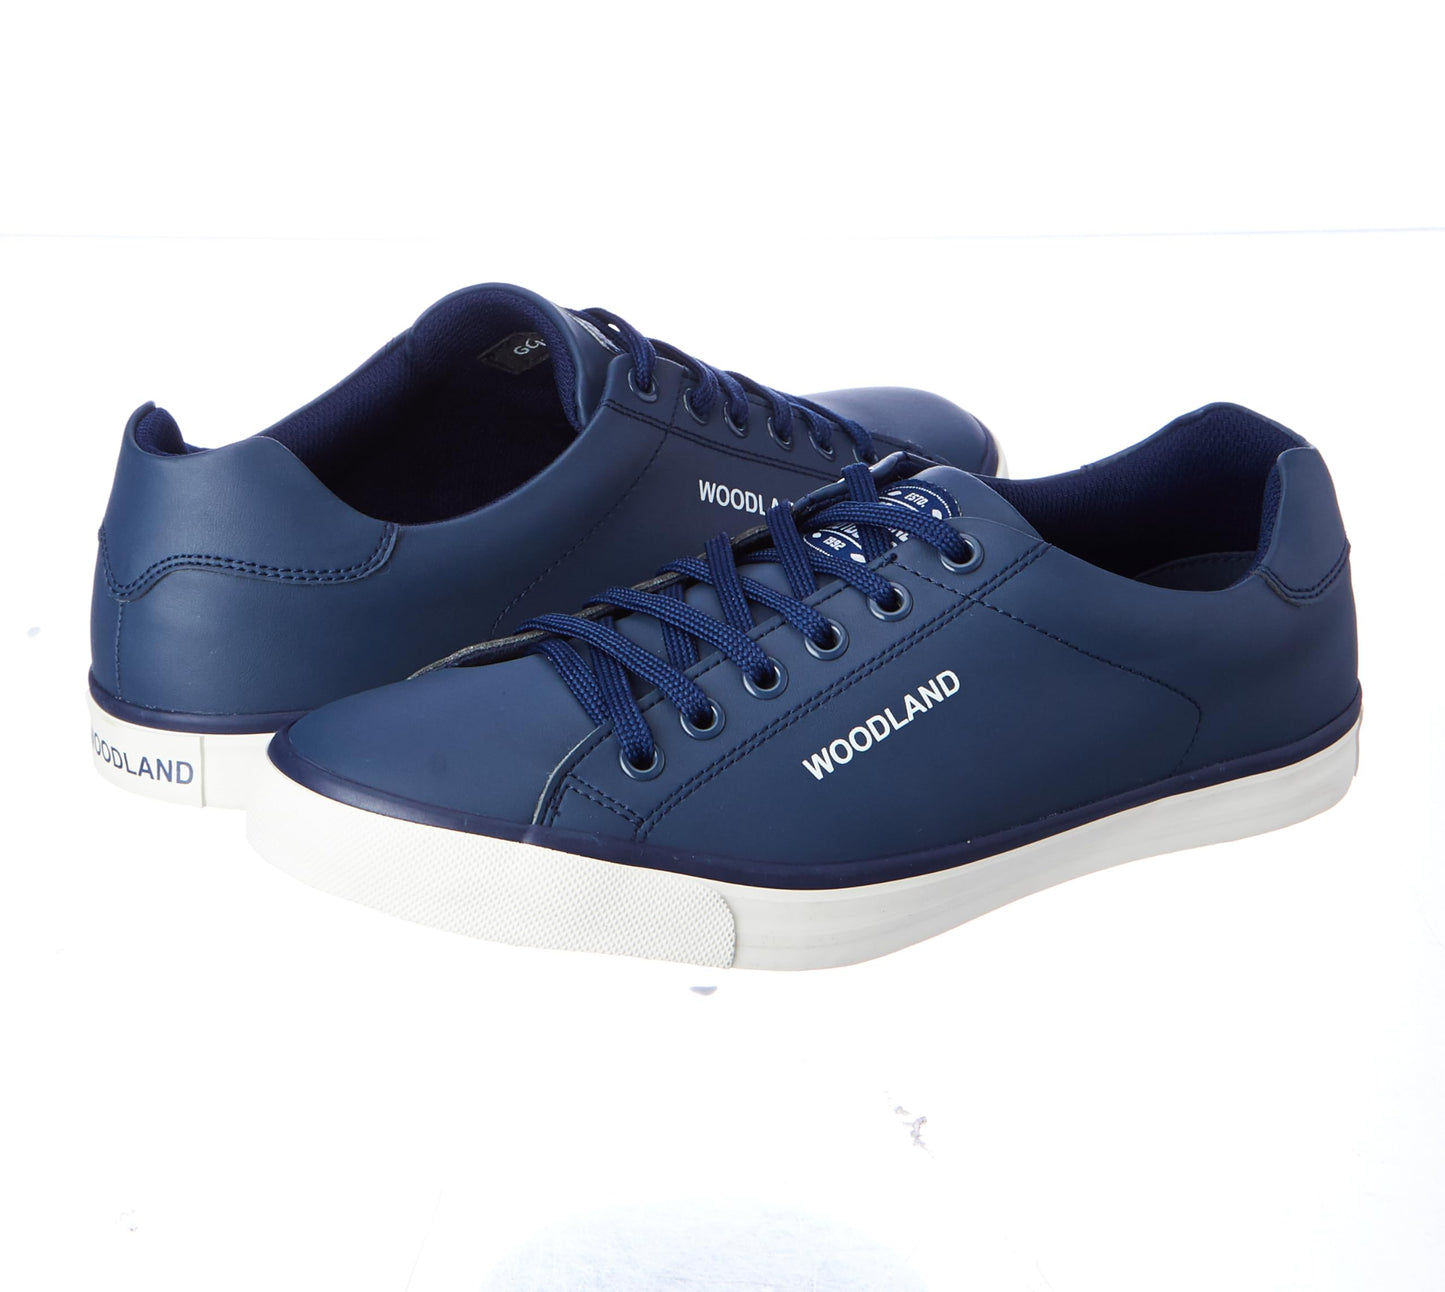 Woodland Men's Navy PU Casual Shoes-11 UK (45 EU) (GC 4207121C)